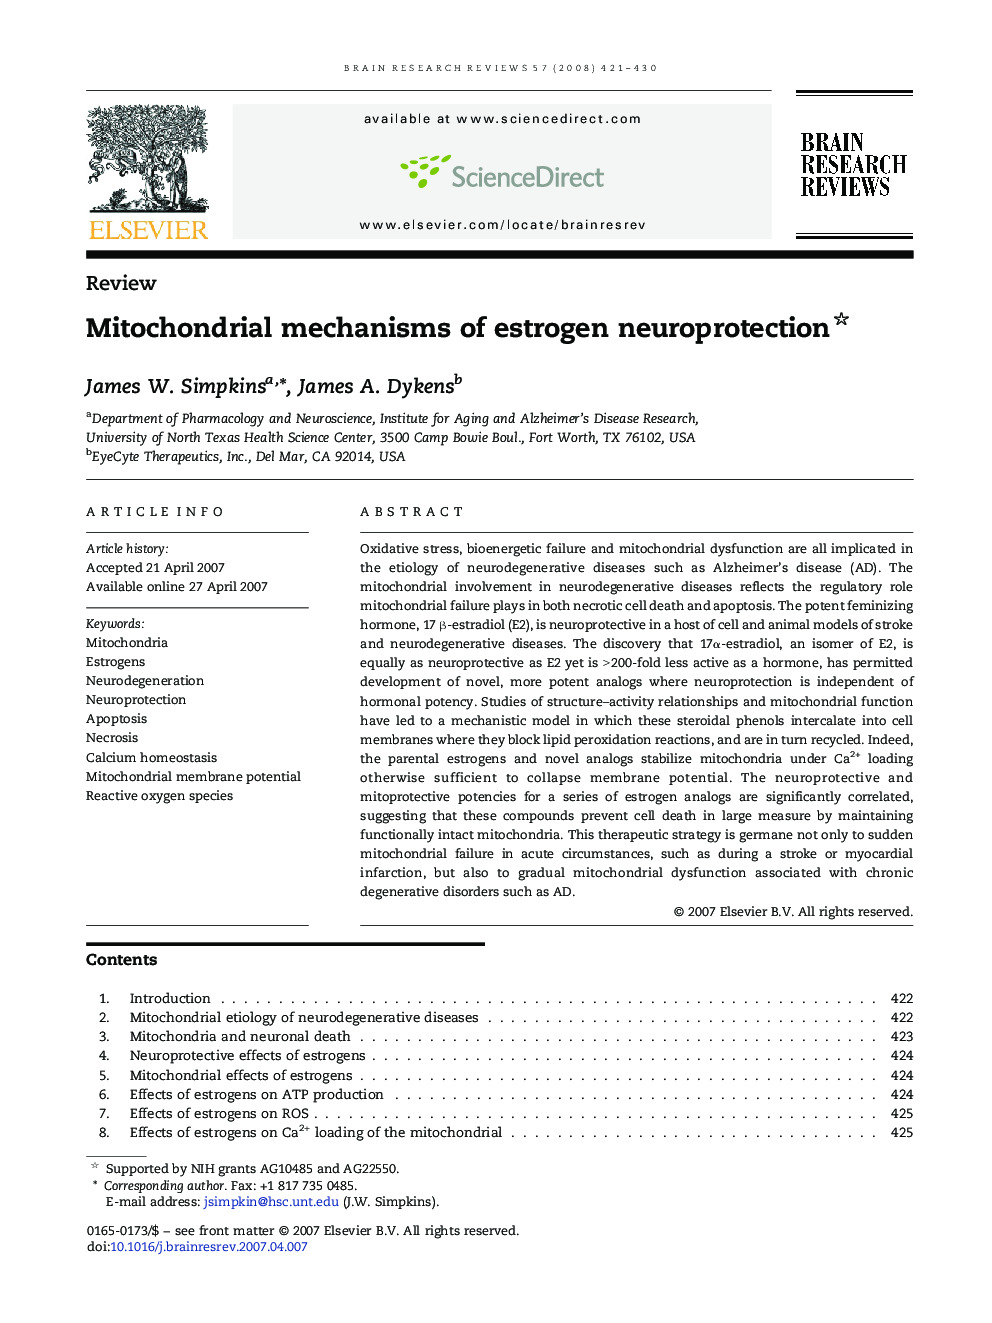 Mitochondrial mechanisms of estrogen neuroprotection 